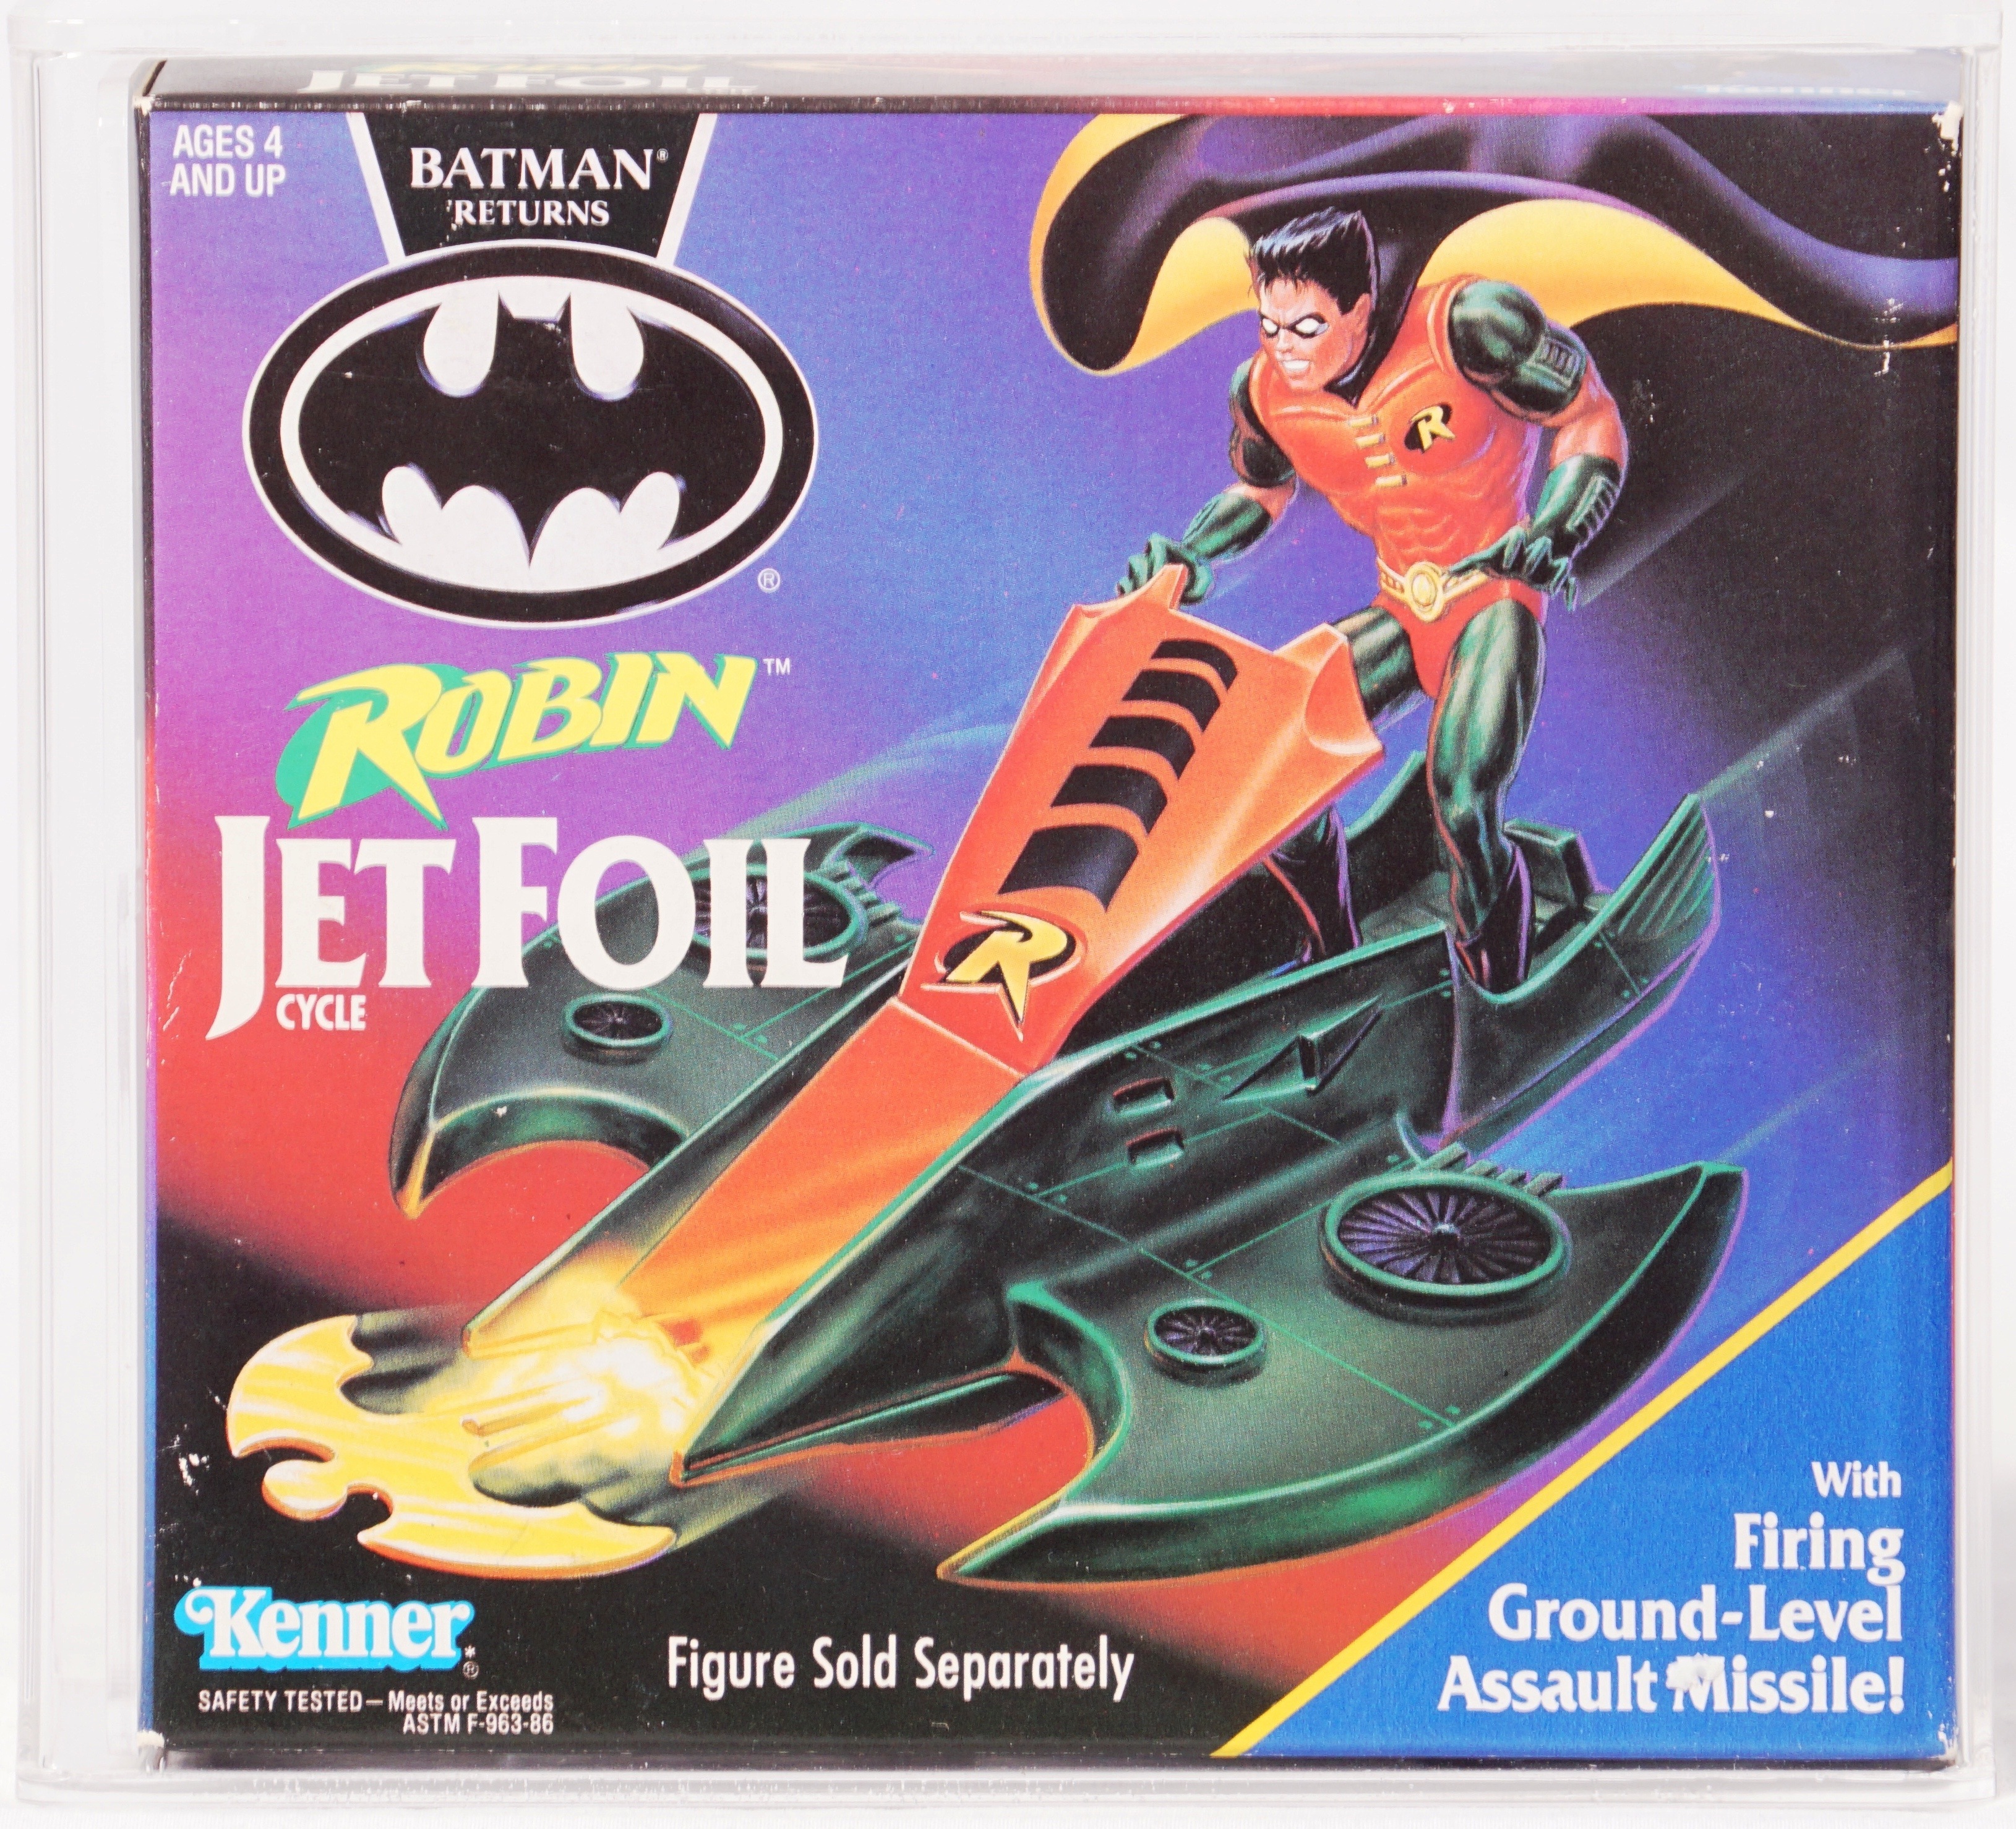 1991 Kenner Batman Returns Boxed Vehicle - Robin Jet Foil Cycle